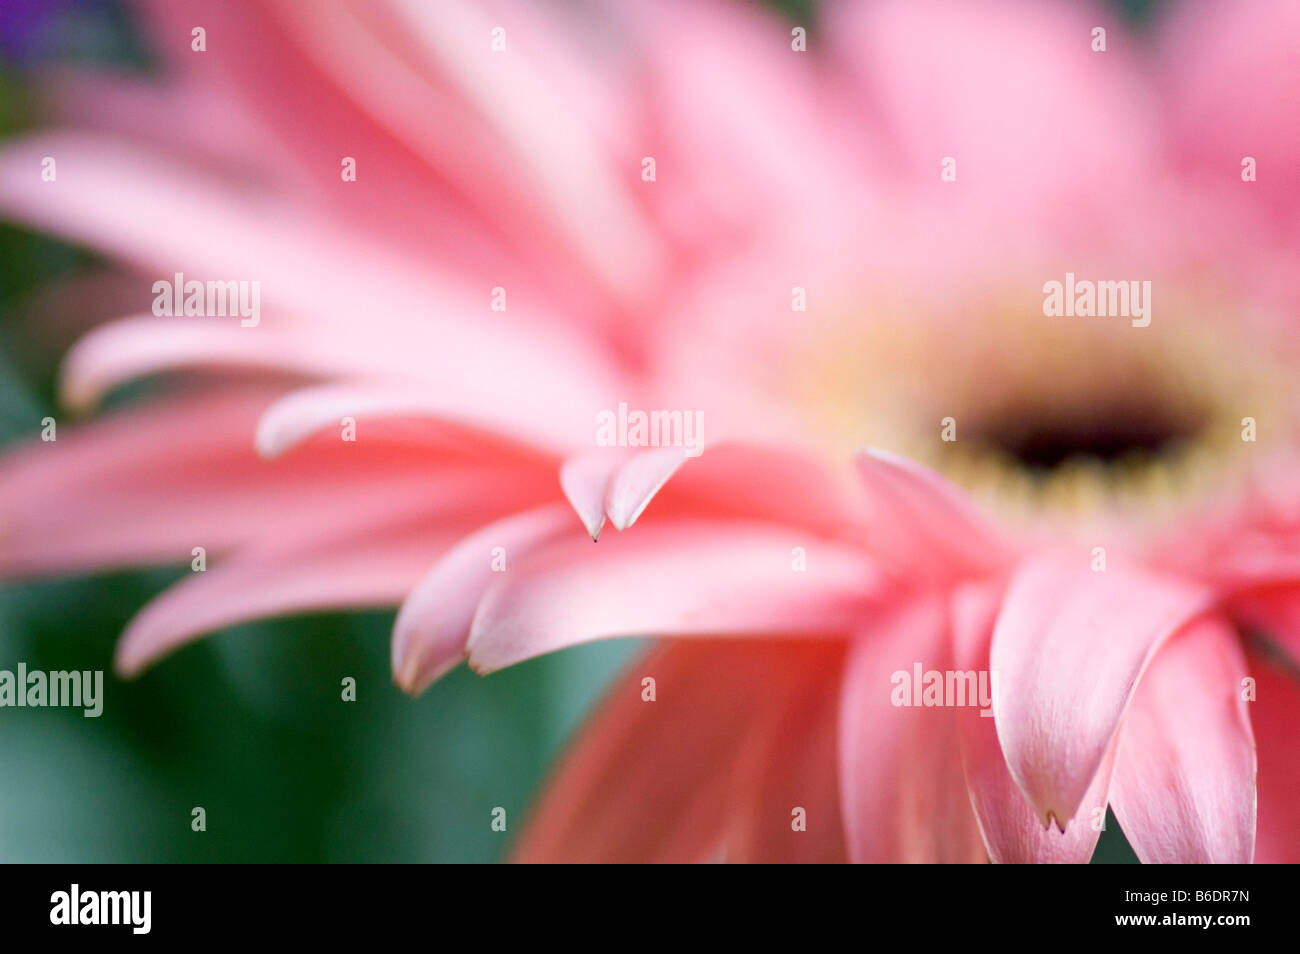 Gerbera jamesonii transvaal daisy flower, close up Stock Photo